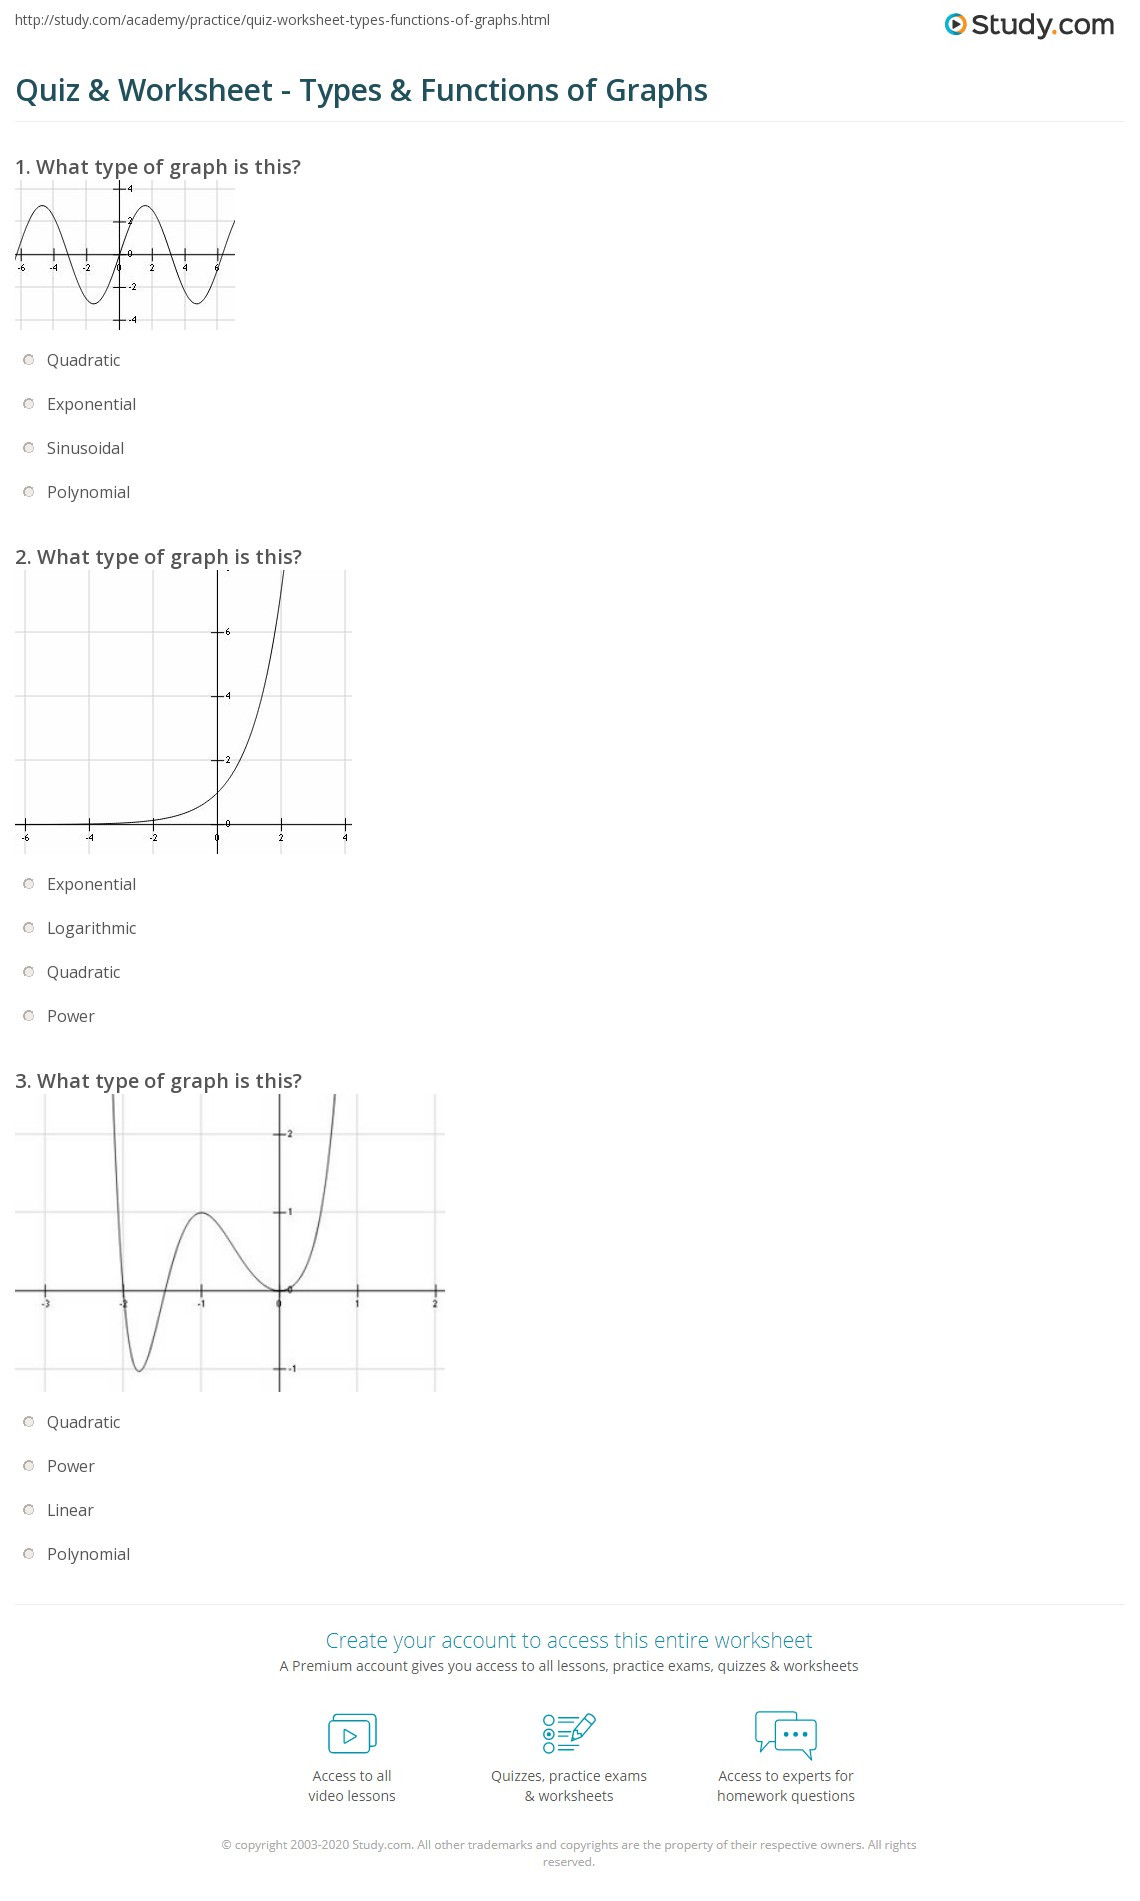 Graphs Of Functions Worksheet Quiz &amp; Worksheet Types &amp; Functions Of Graphs